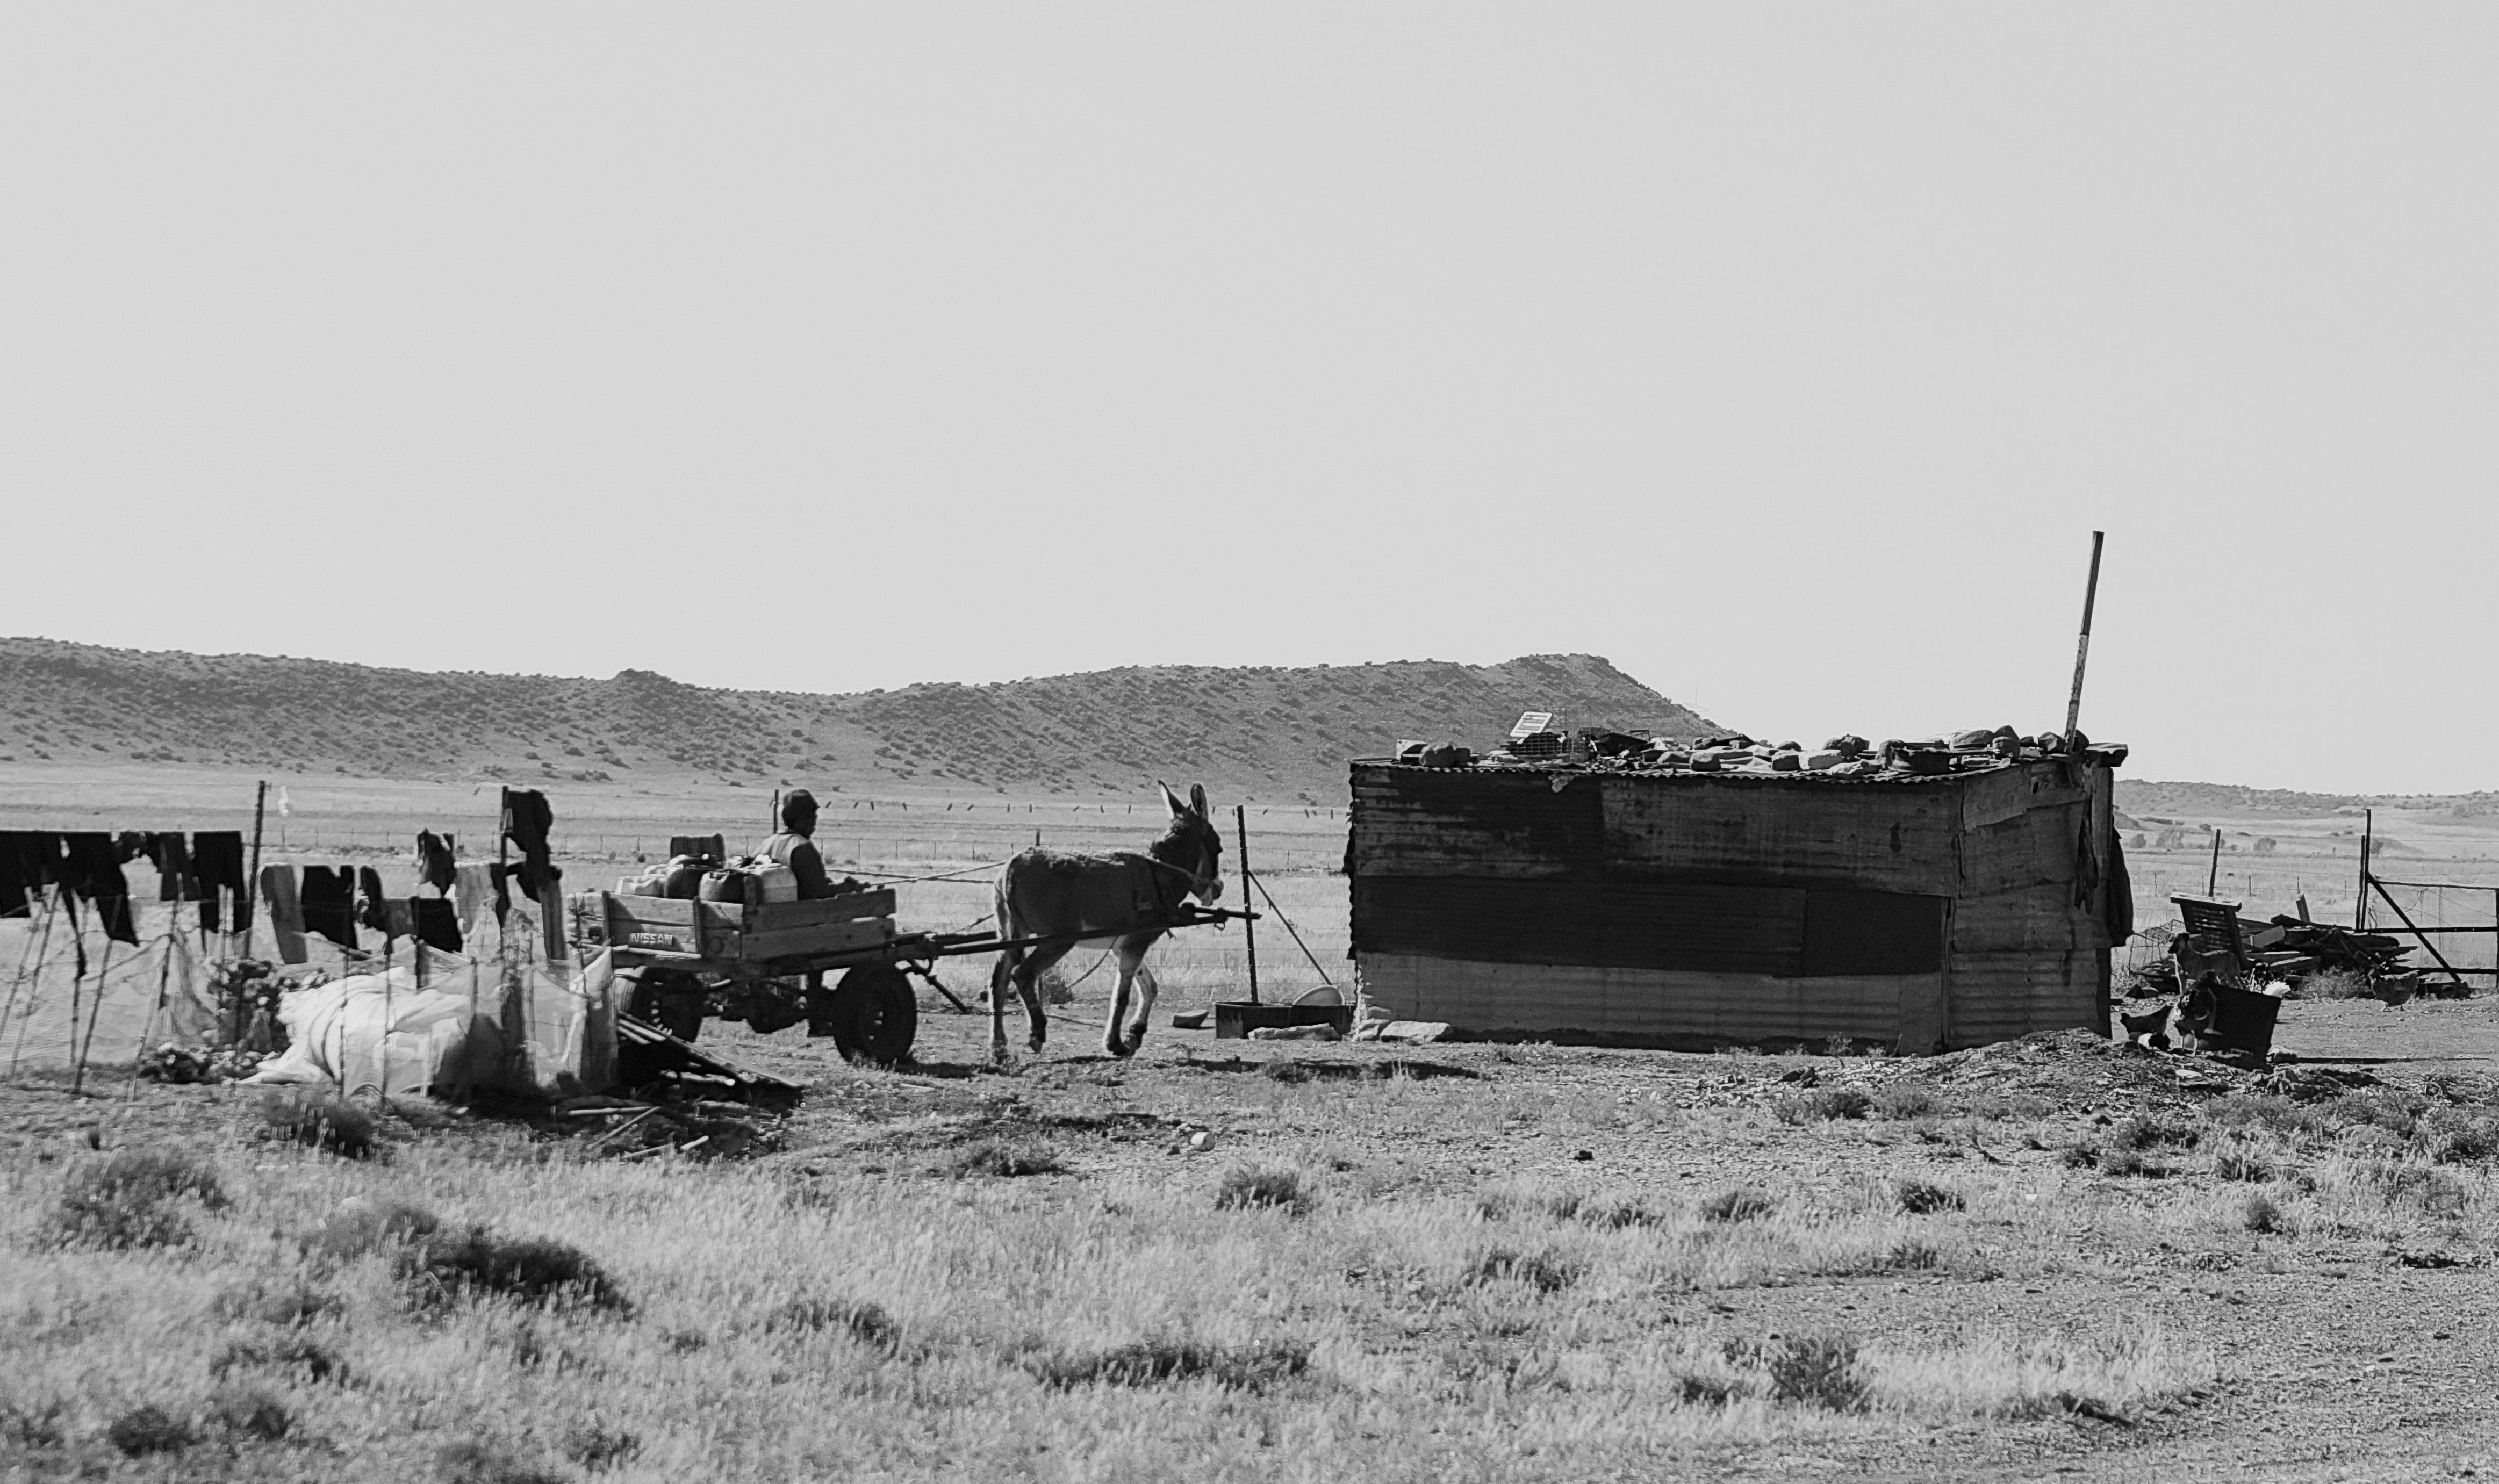 A donkey cart vignette at Die Nek settlement. 